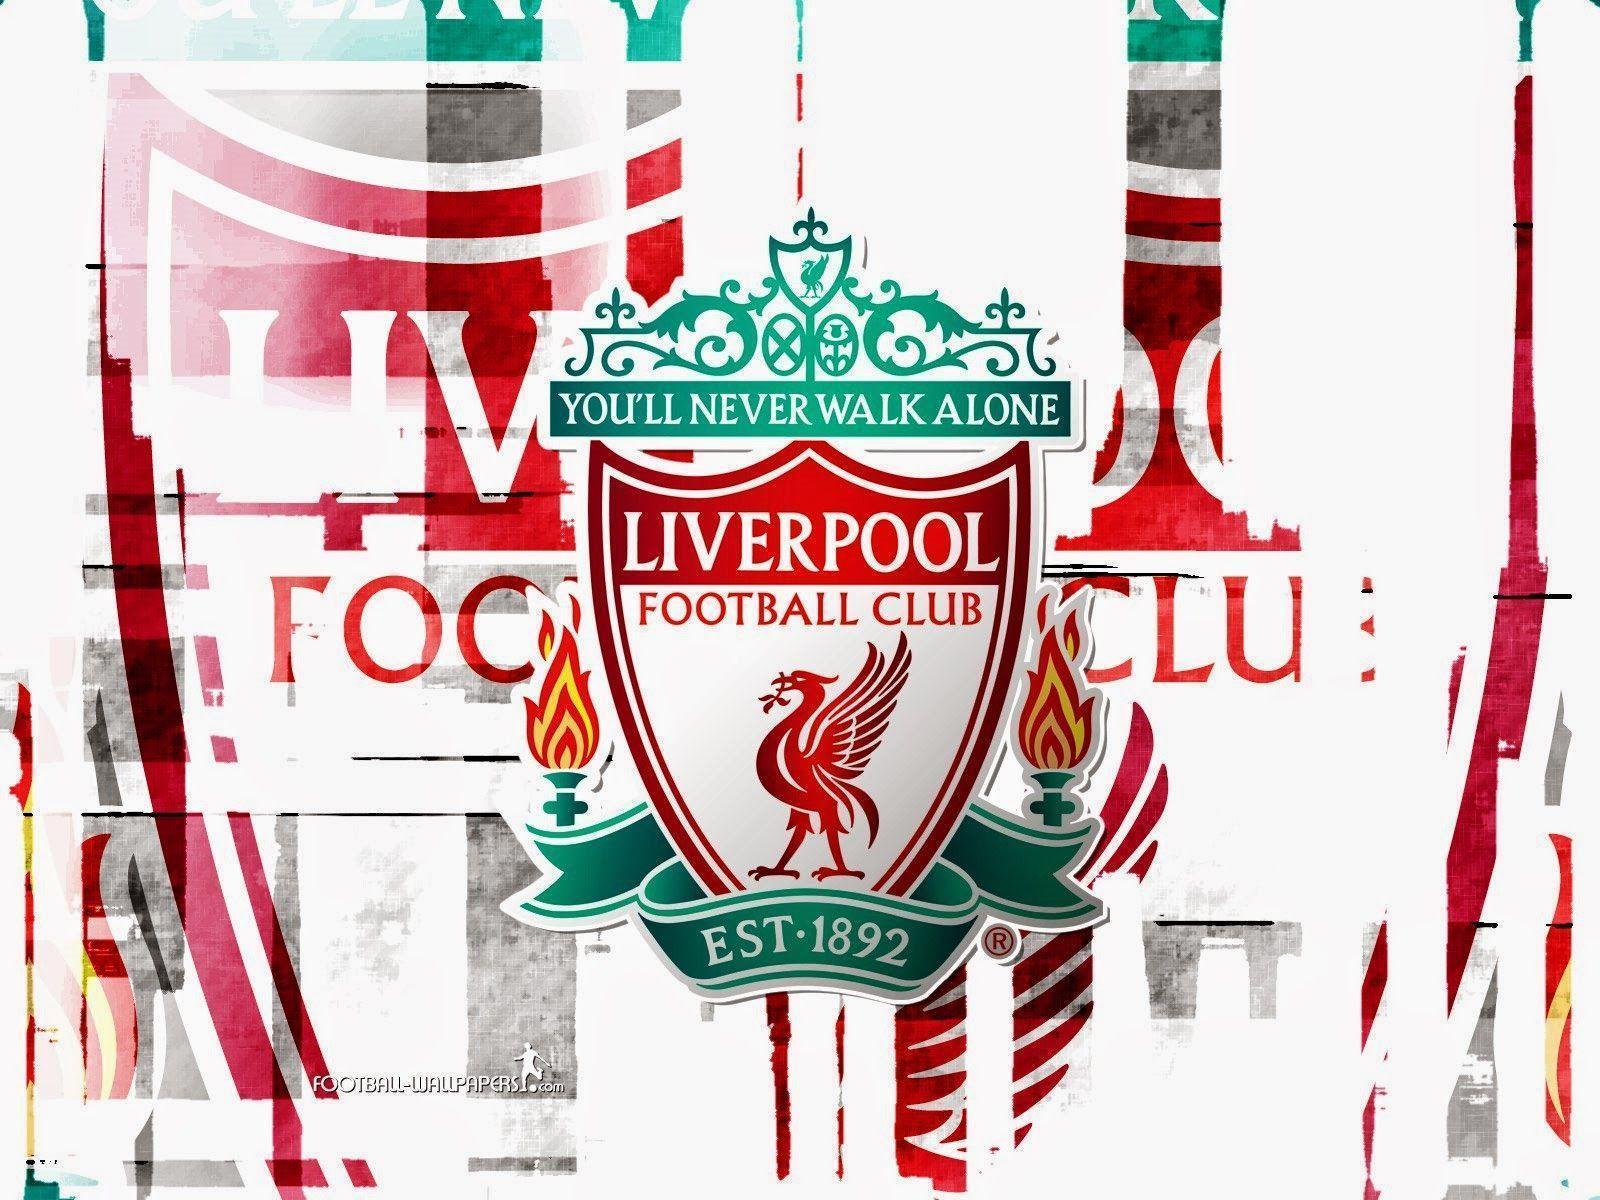 Wallpaper Liverpool Logo Wallpapers